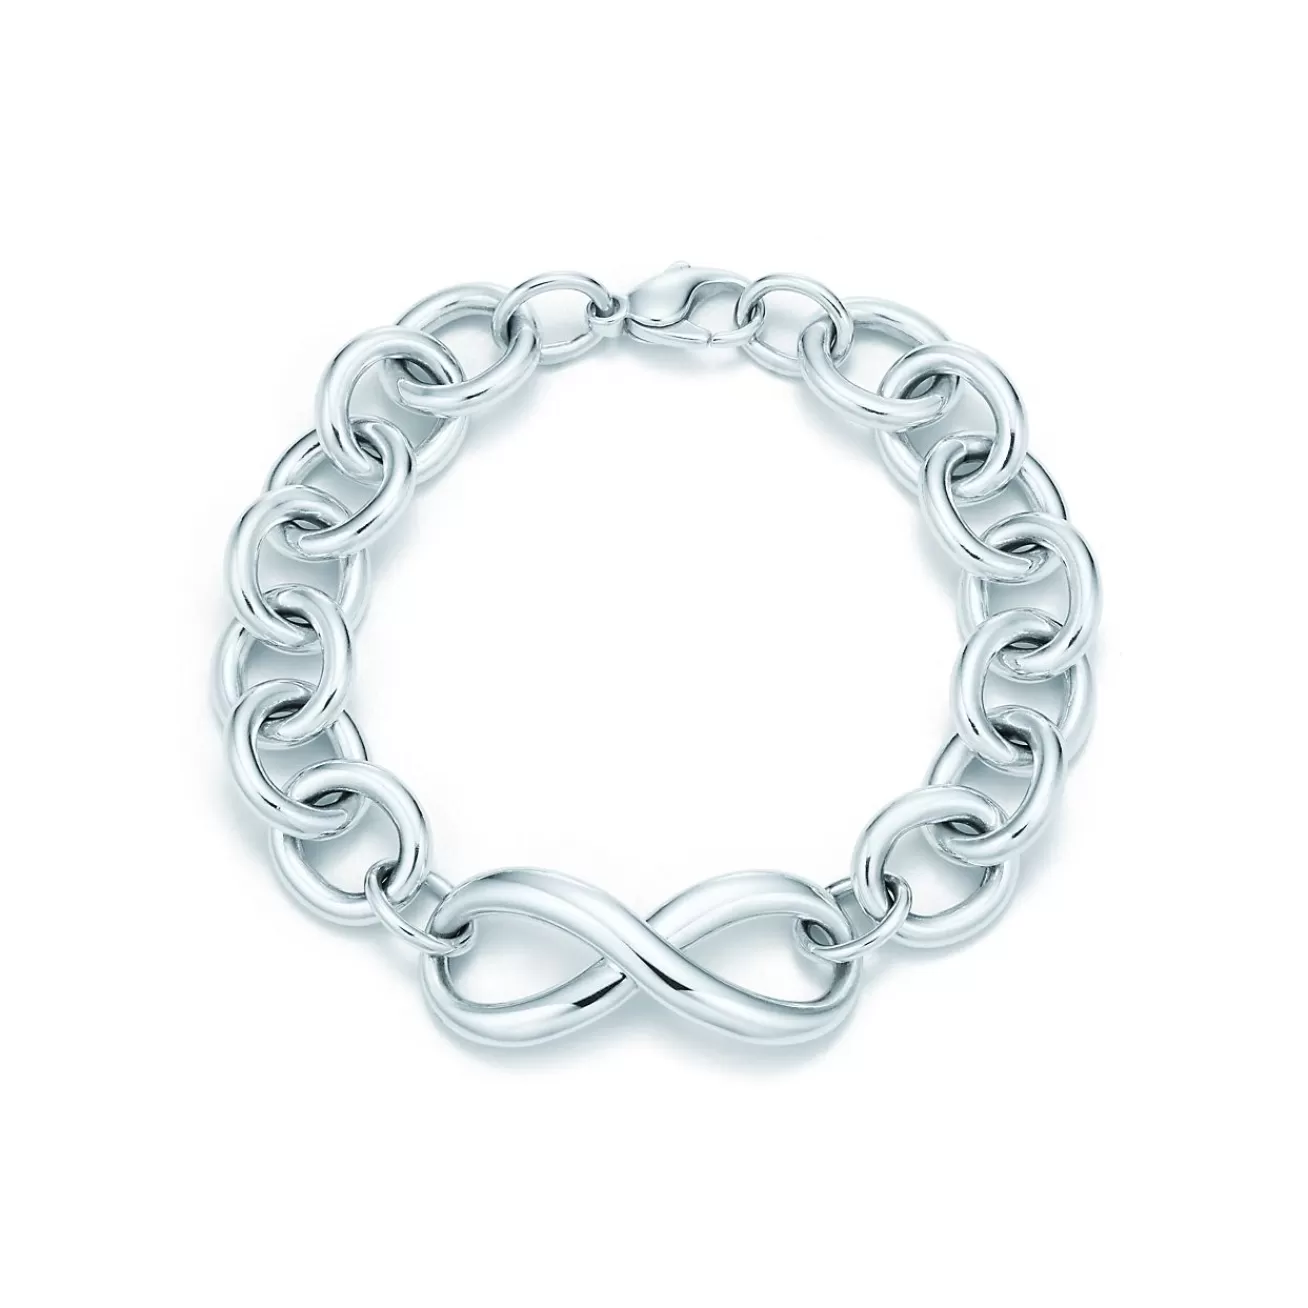 Tiffany & Co. Tiffany Infinity bracelet in sterling silver, medium. | ^ Bracelets | Sterling Silver Jewelry